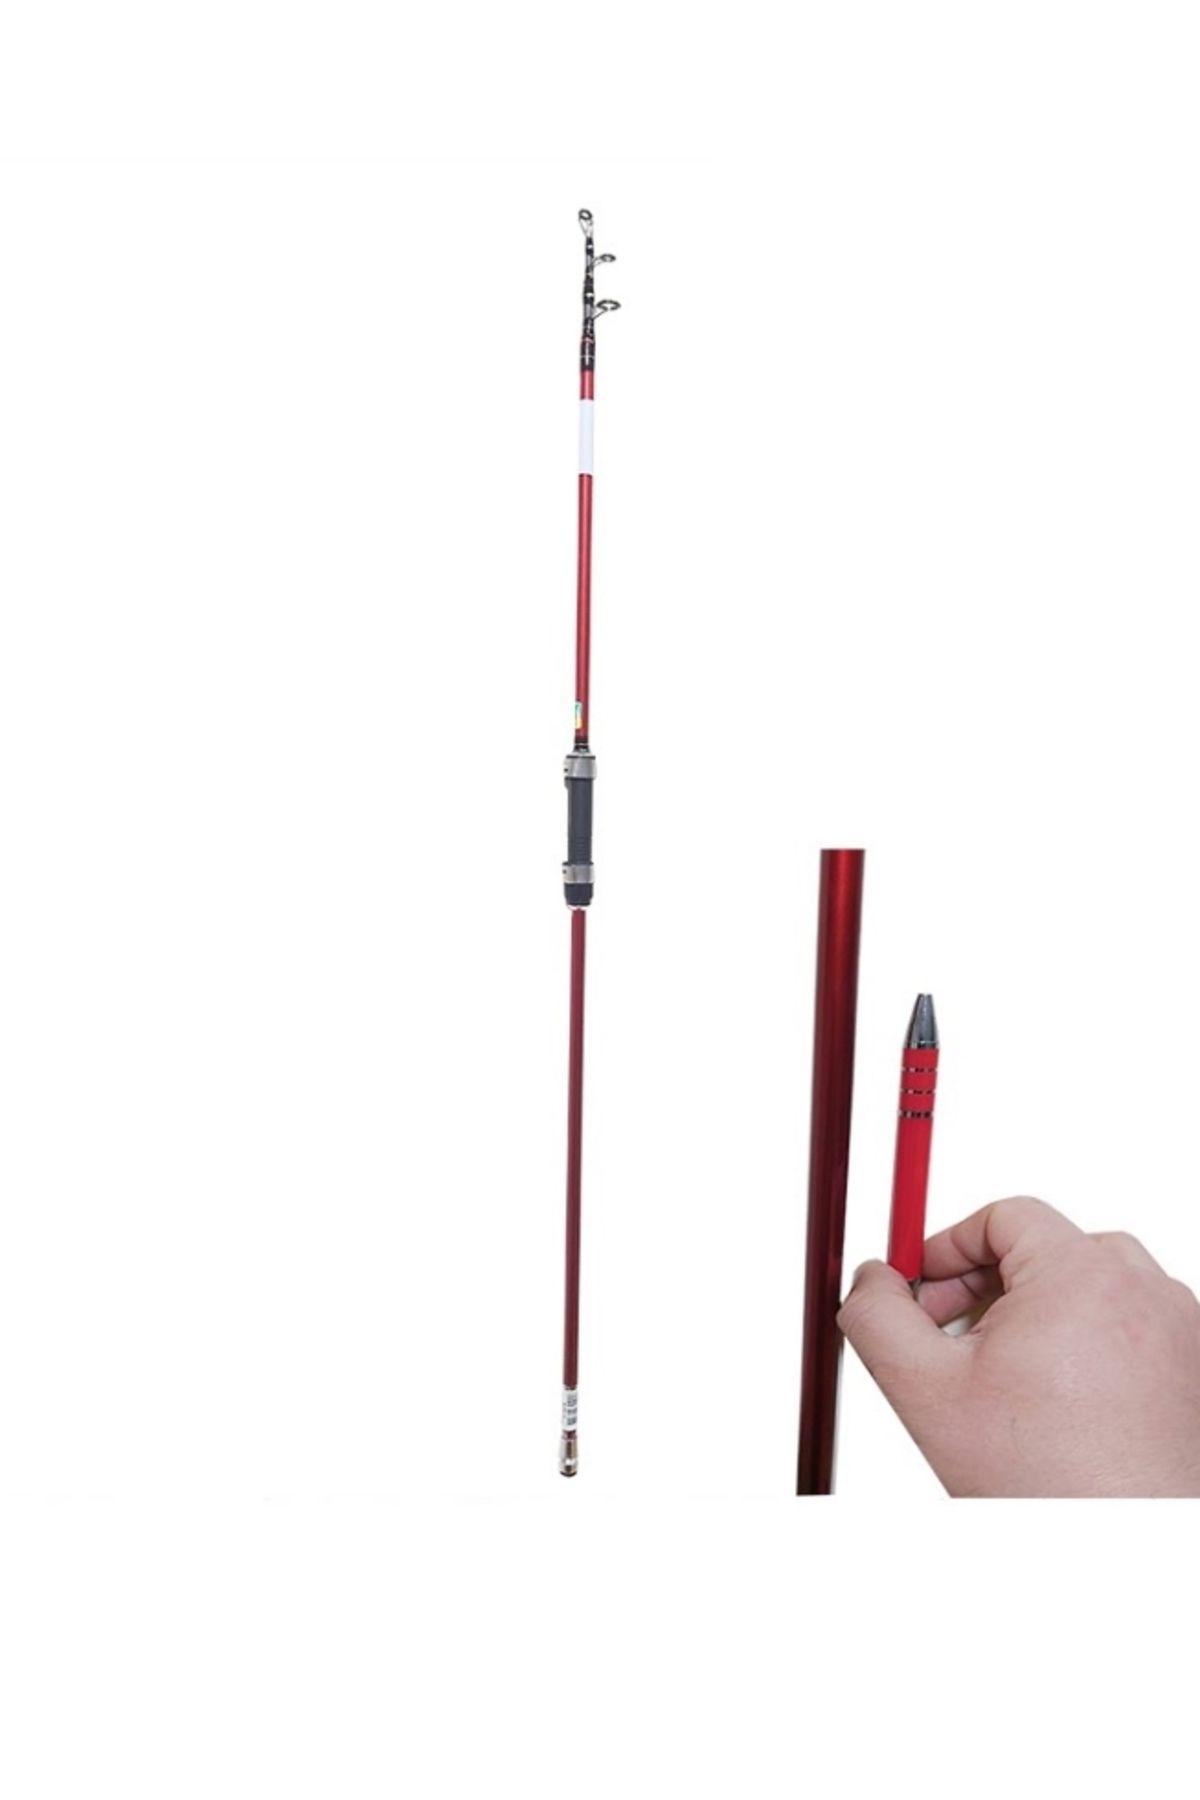 RİVER Fishing Pole - Trendyol